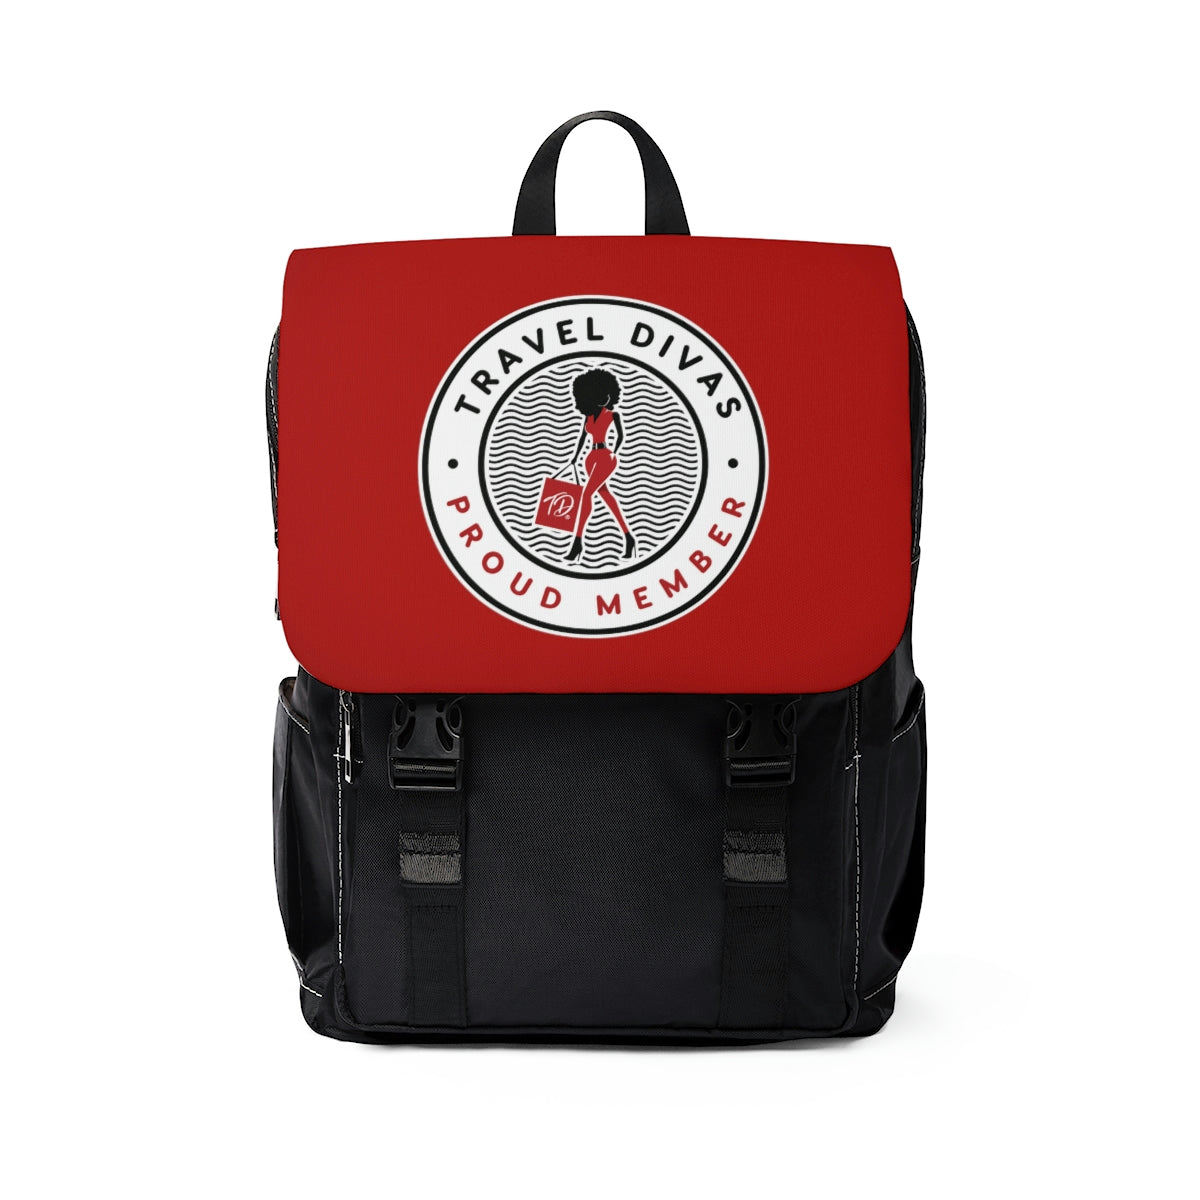 Proud Member Casual Shoulder Backpack - Red